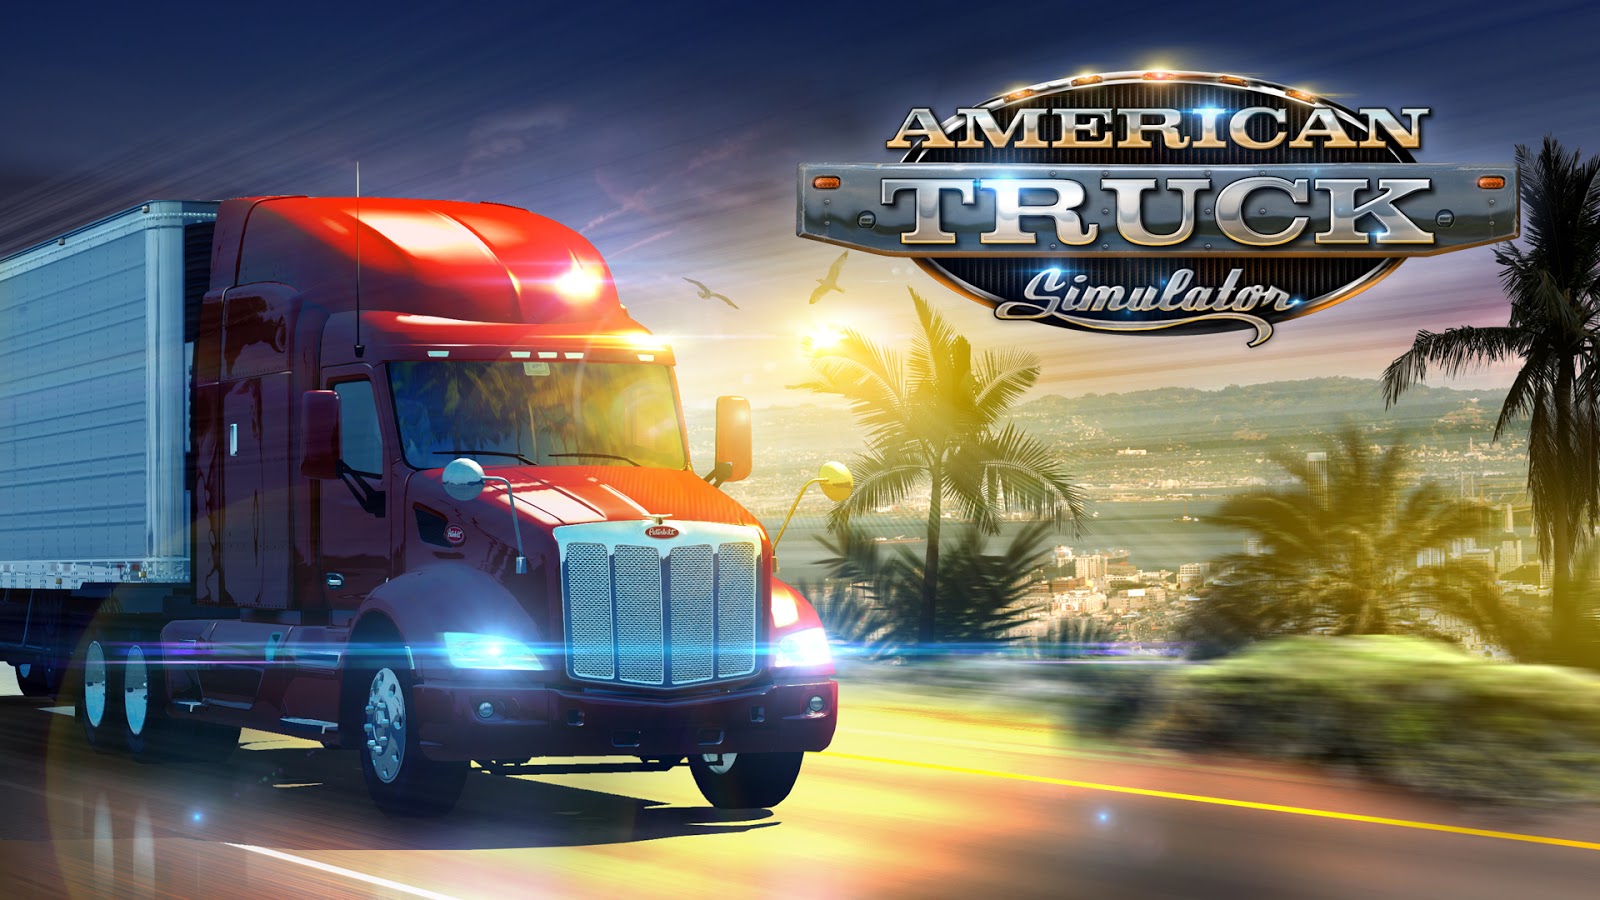 High Resolution Wallpaper | American Truck Simulator 1600x900 px